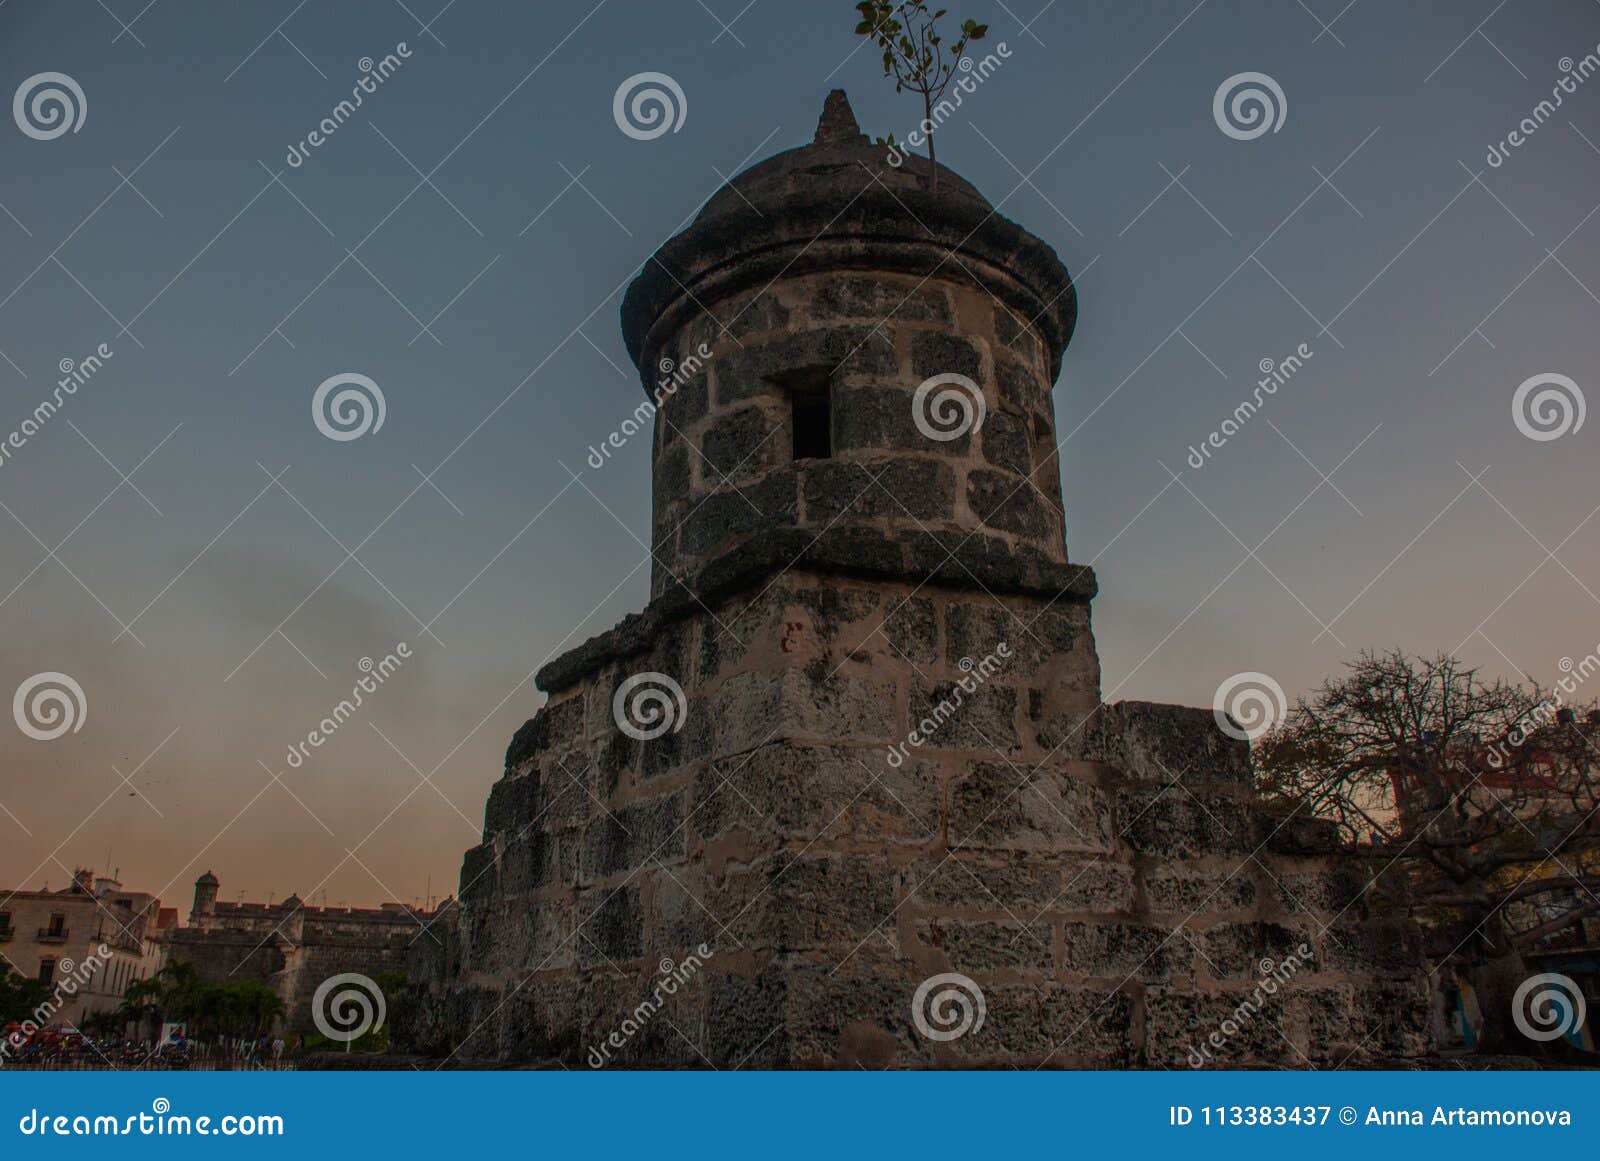 la real fuerza fortress in the evening. castillo de la real fuerza - old havana, cuba